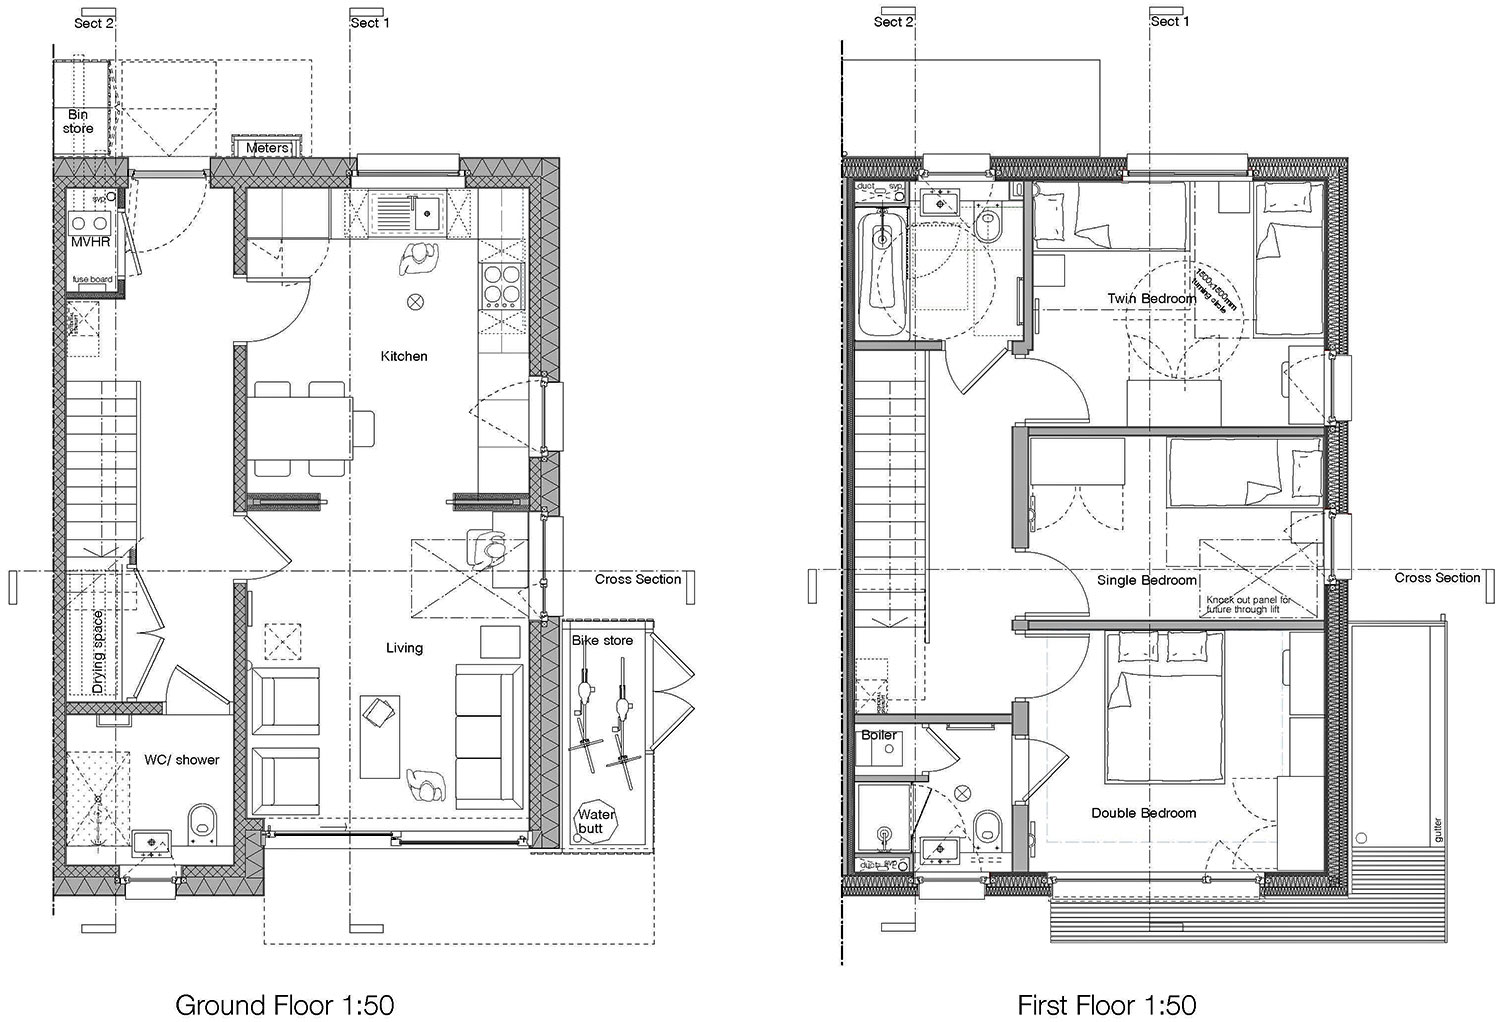 BRE-Passivhaus-Competition-Prewett-Bizley-Architects-Plans.jpg